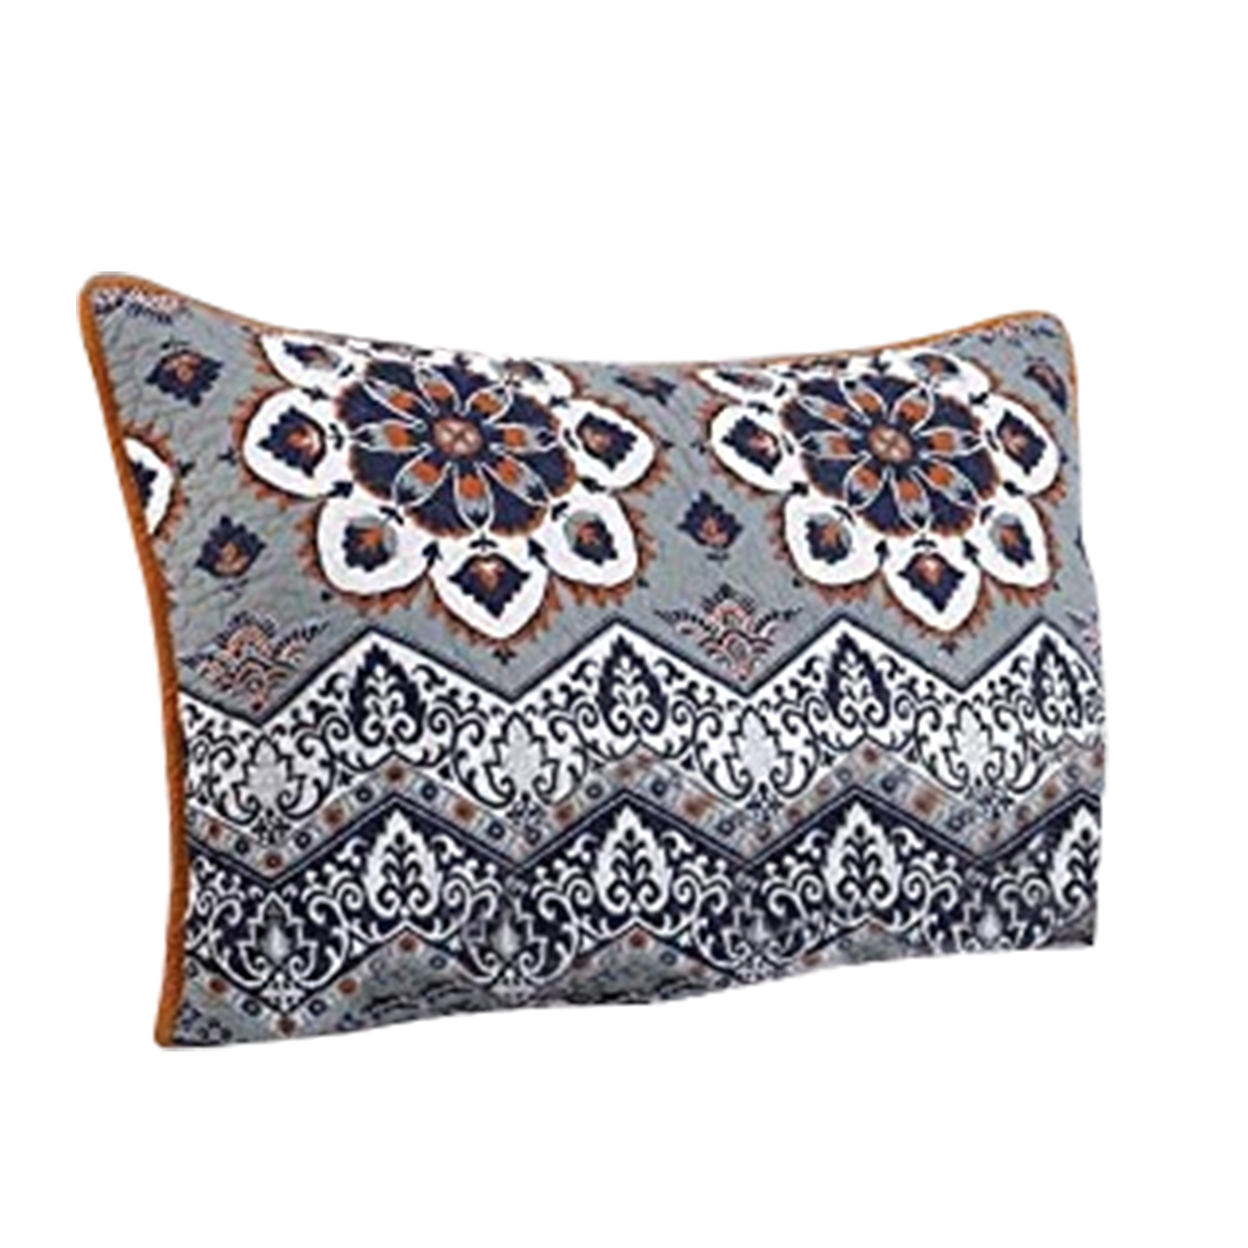 Damask Print Twin Quilt Set With Embroidered Pillows,Indigo Blue And Orange- Saltoro Sherpi